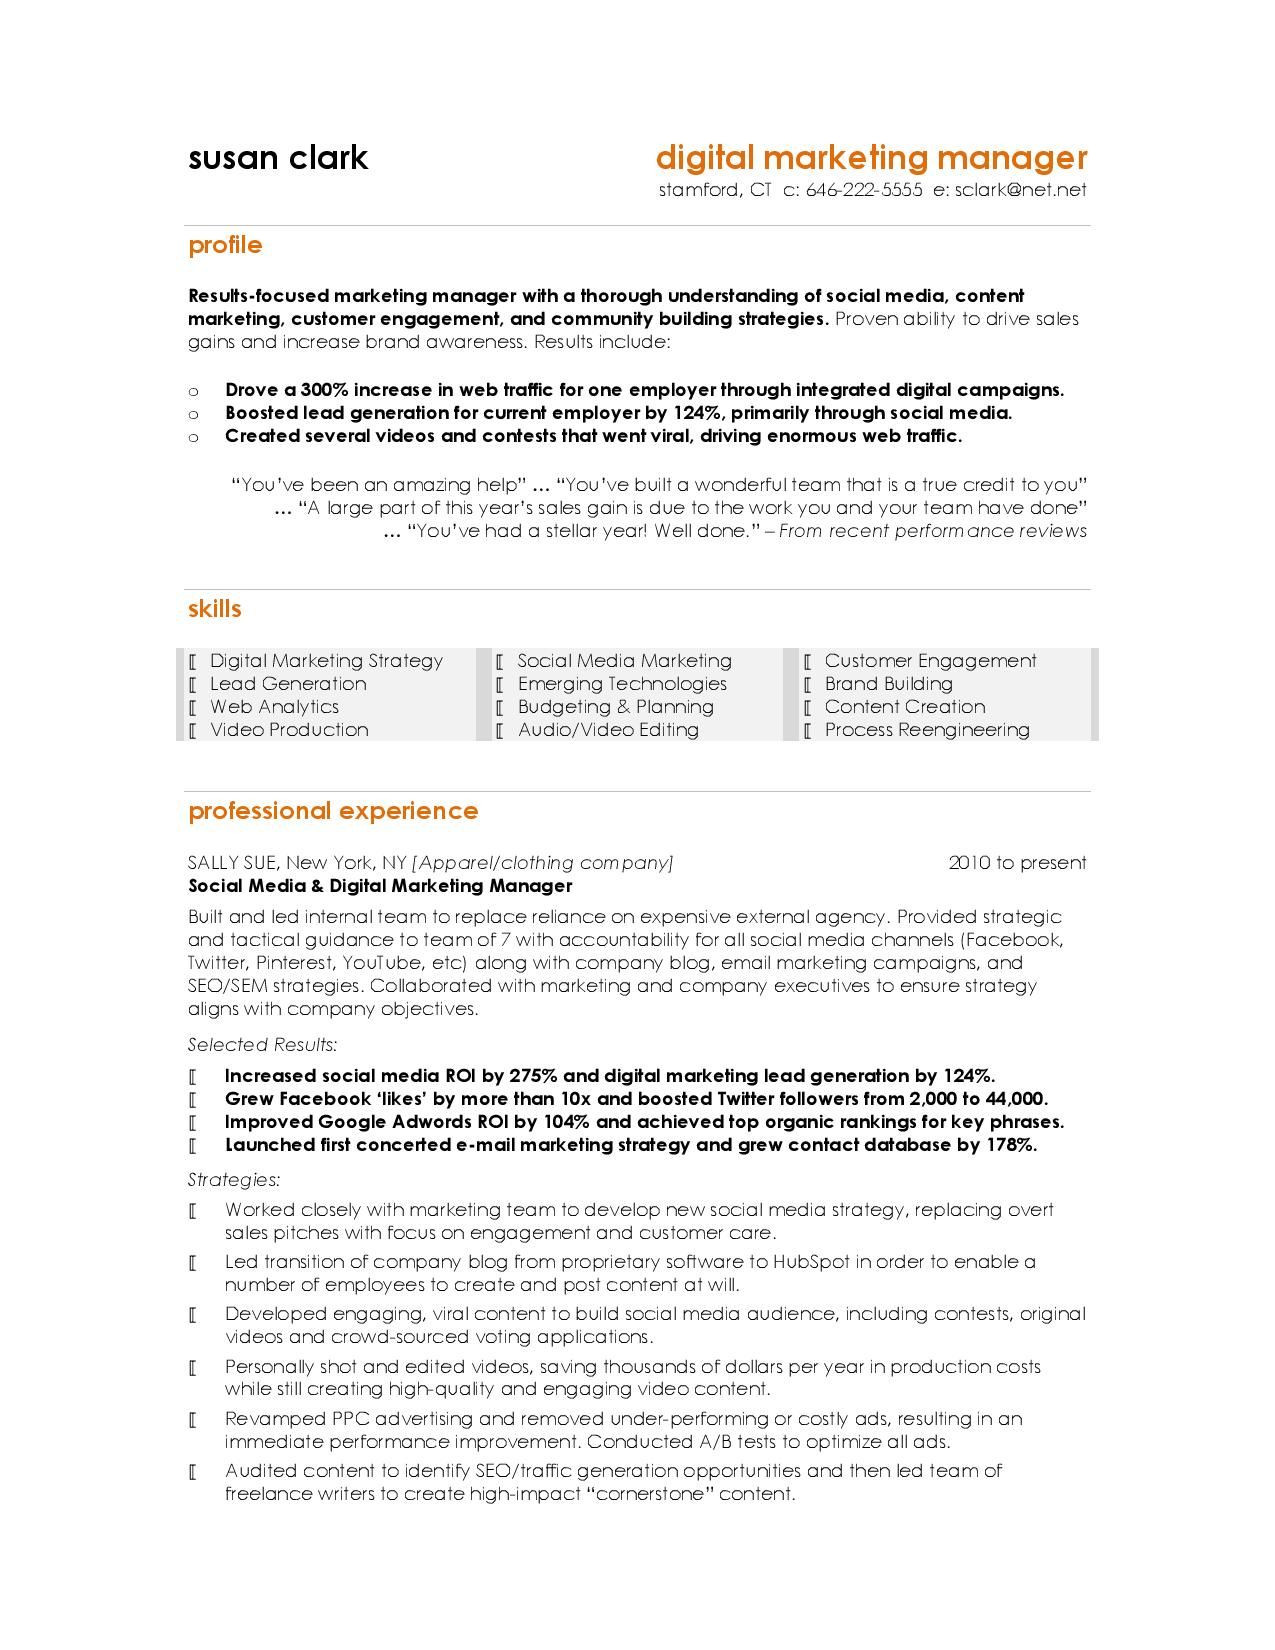 Sample Resume for Digital Marketing Executive 10 Marketing Resume Samples Hiring Managers Will Notice Digital …